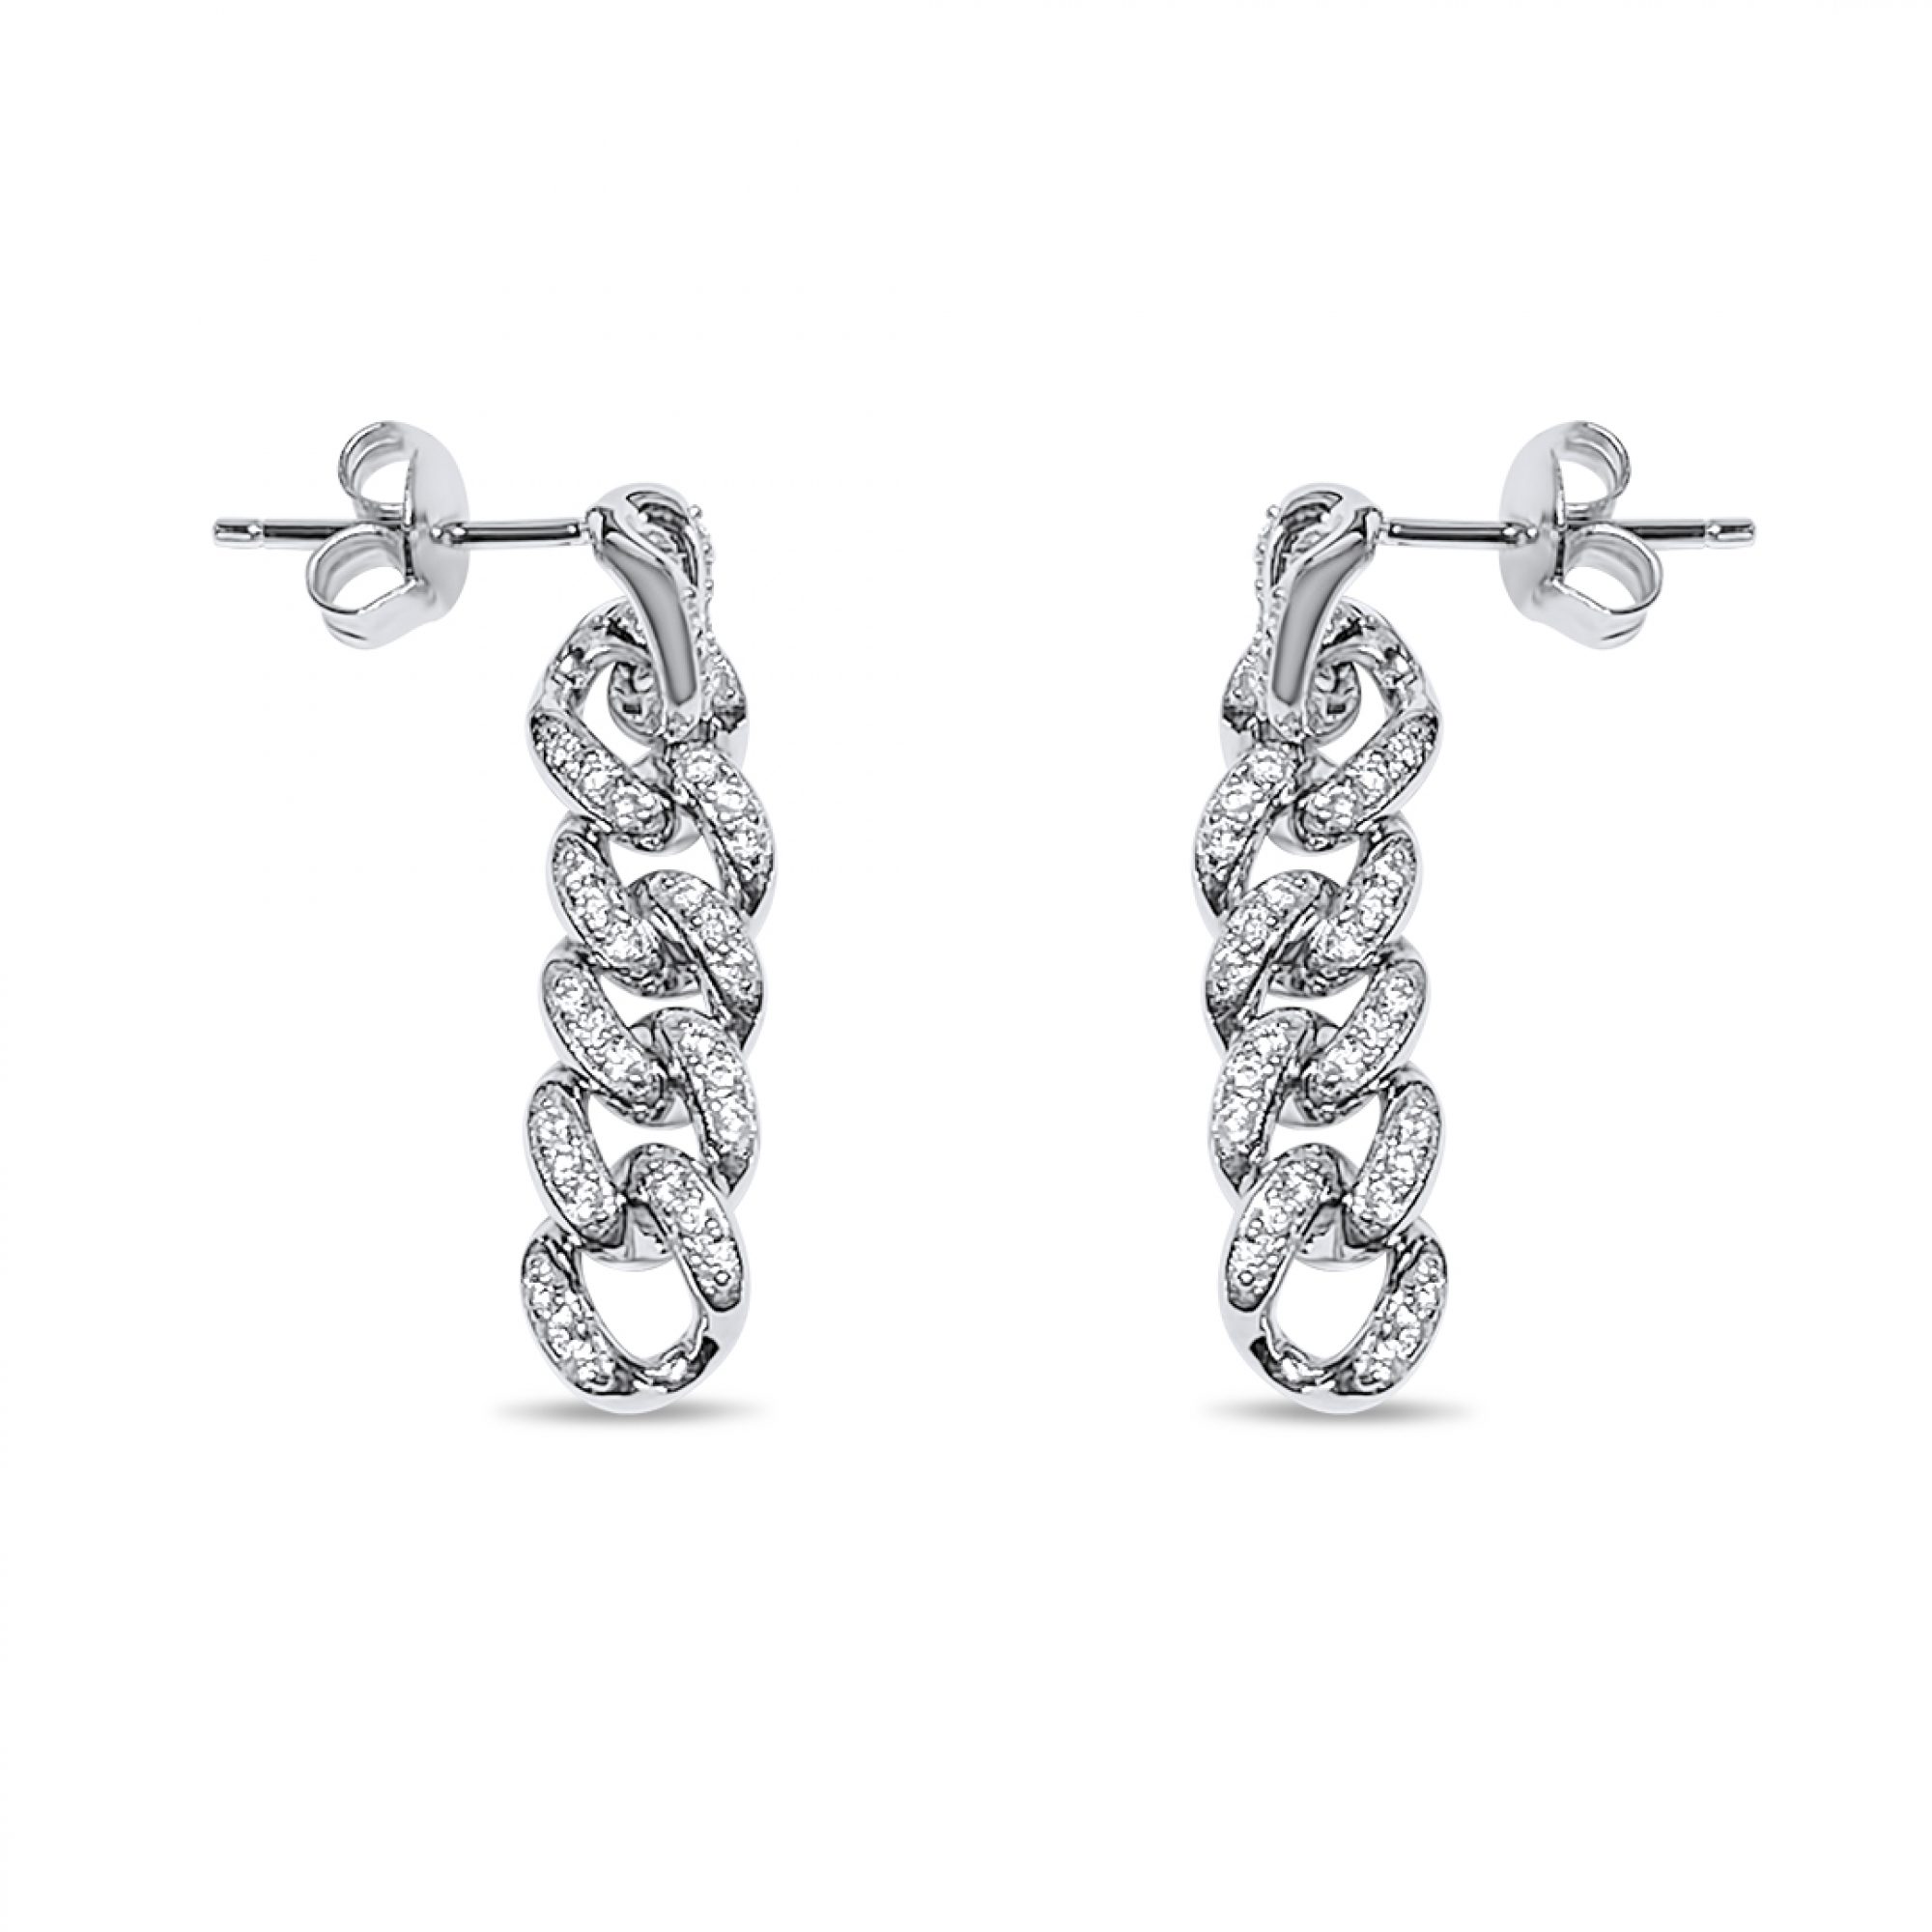 Silver chain earrings with zircon stones